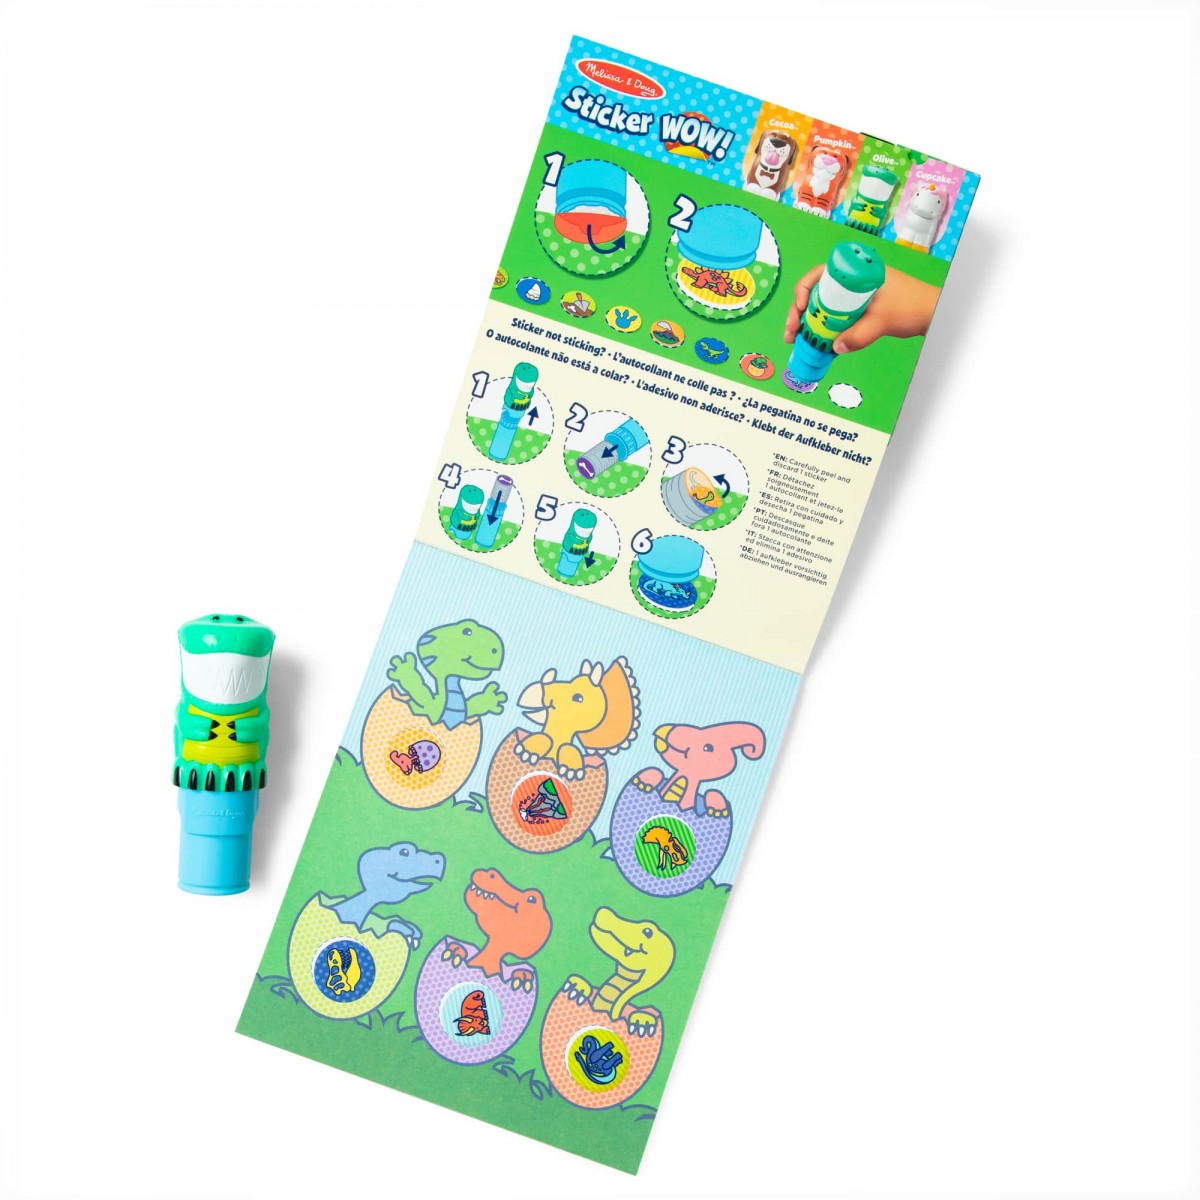 Melissa and Doug Sticker WOW! Dinosaur Sticker Stamper Activity Pad Set at  Toys R Us UK